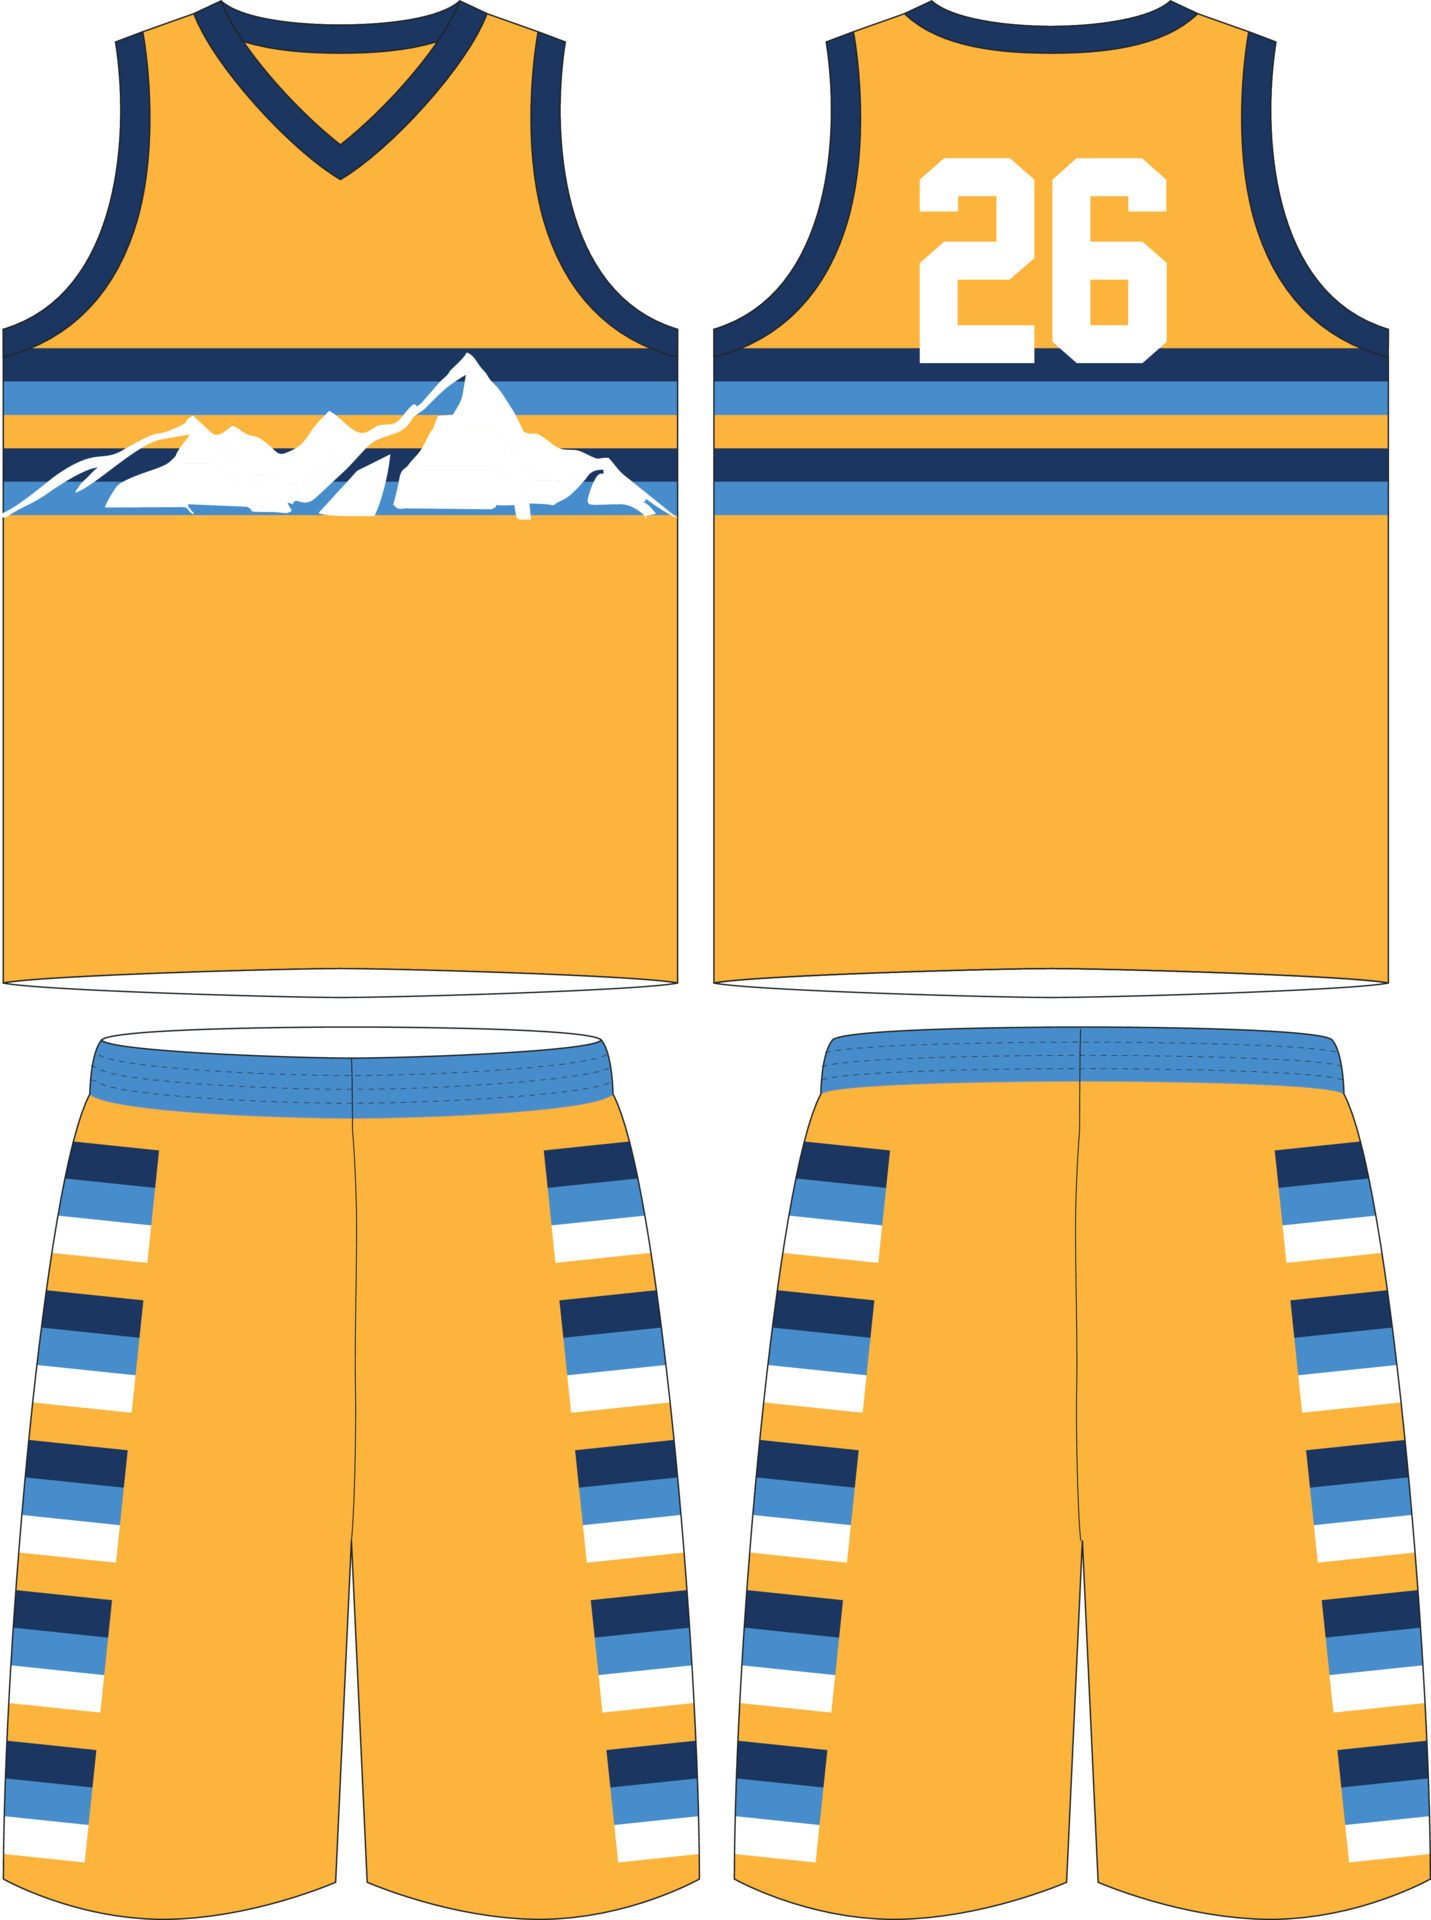 Basketball uniform design template. Abstract pattern background